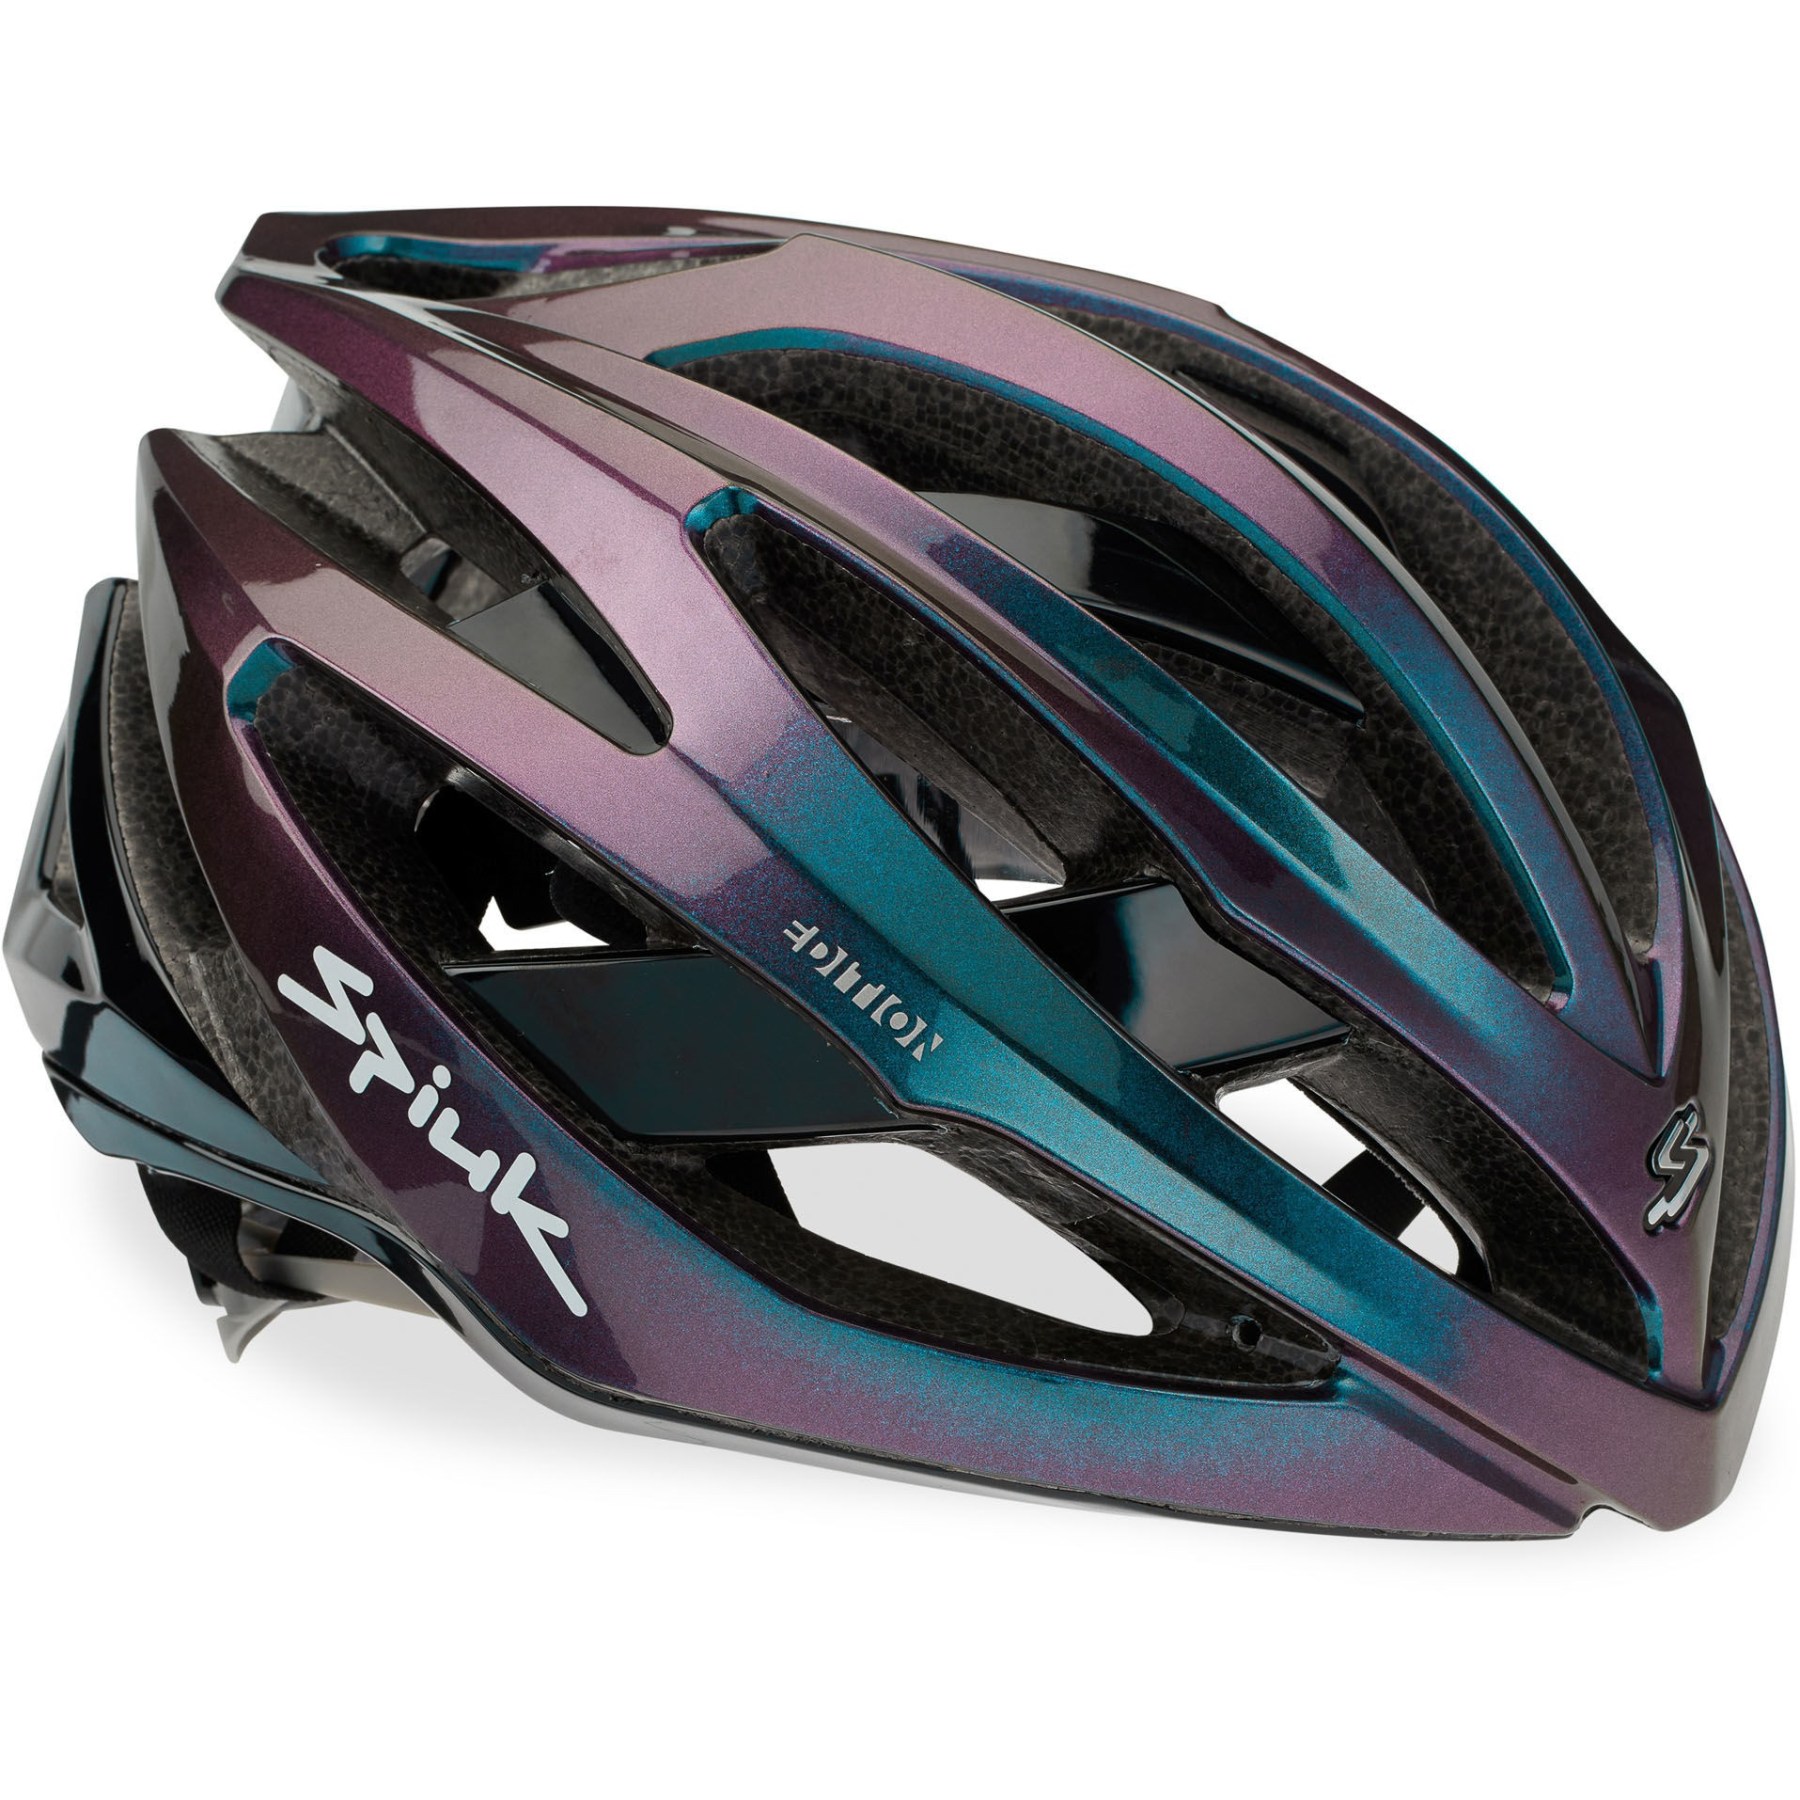 Image of Spiuk Adante Edition Helmet - iridiscent